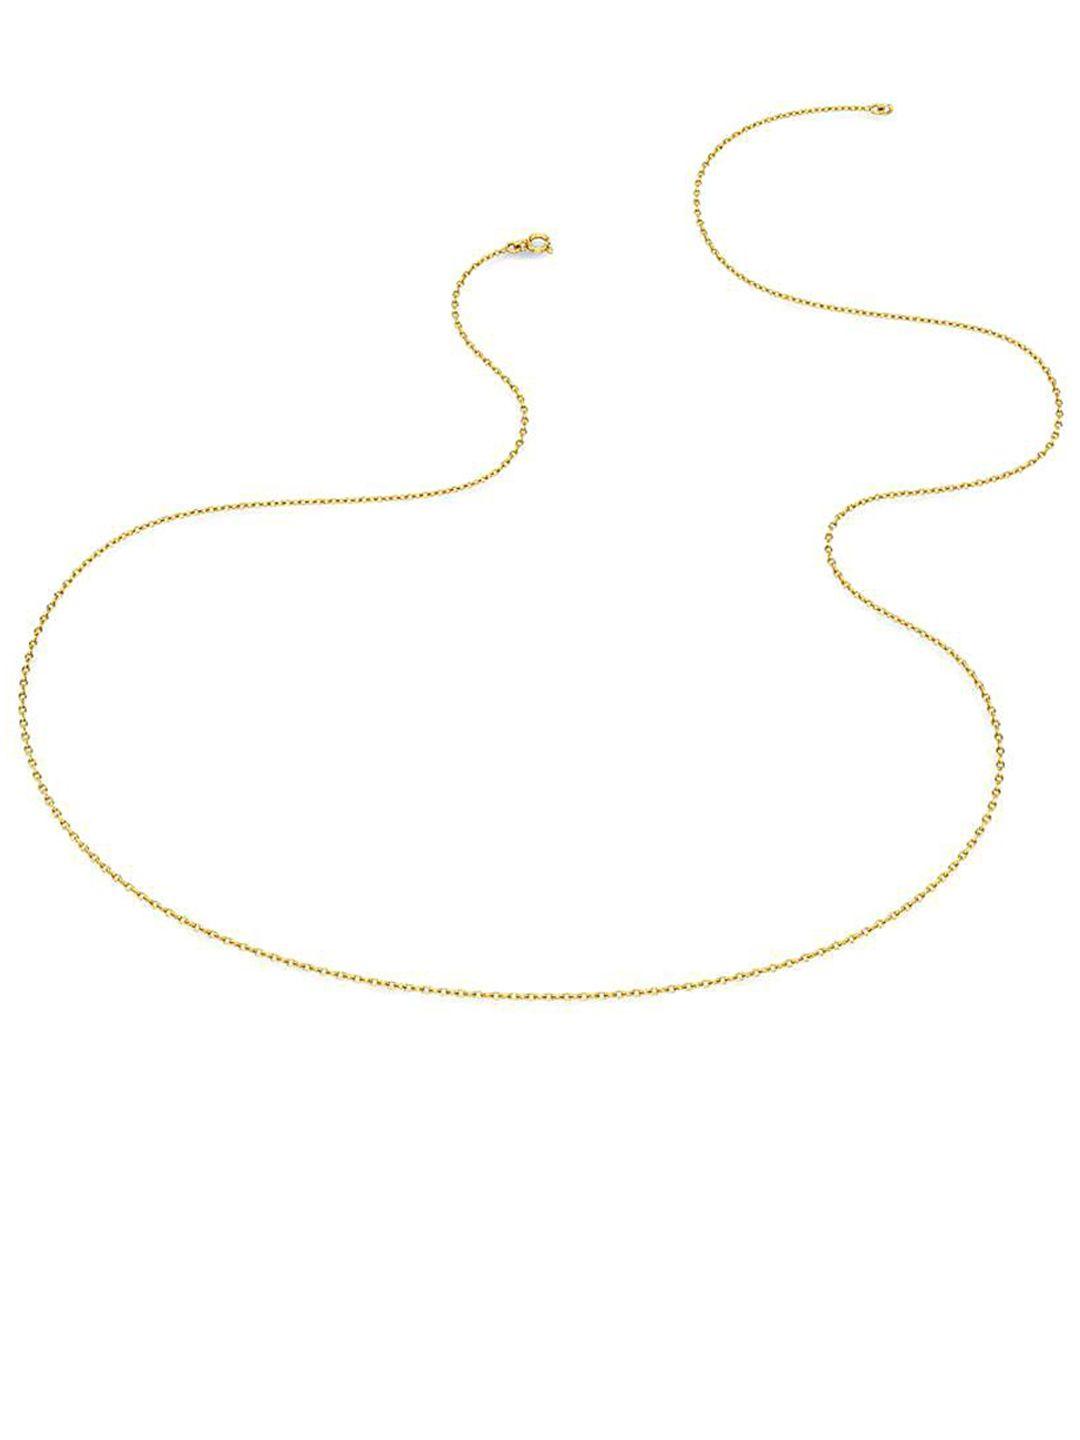 candere a kalyan jewellers company 18kt bis hallmark gold chain-1.9gm